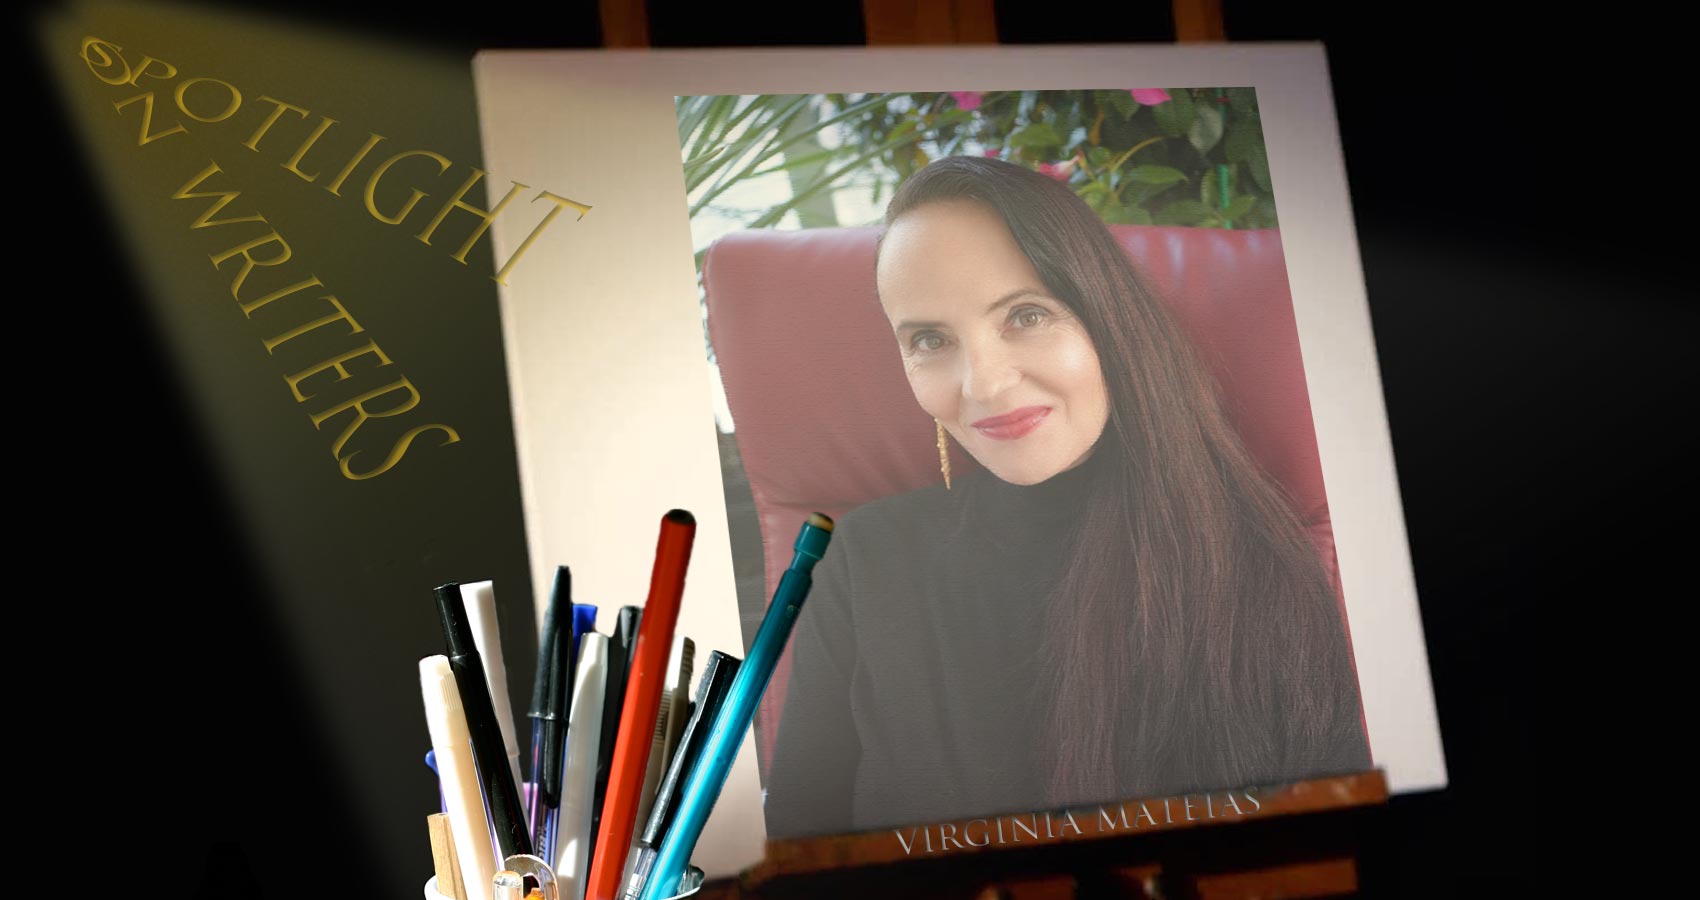 Spotlight On Writers - Virginia Mateias, interview at Spillwords.com